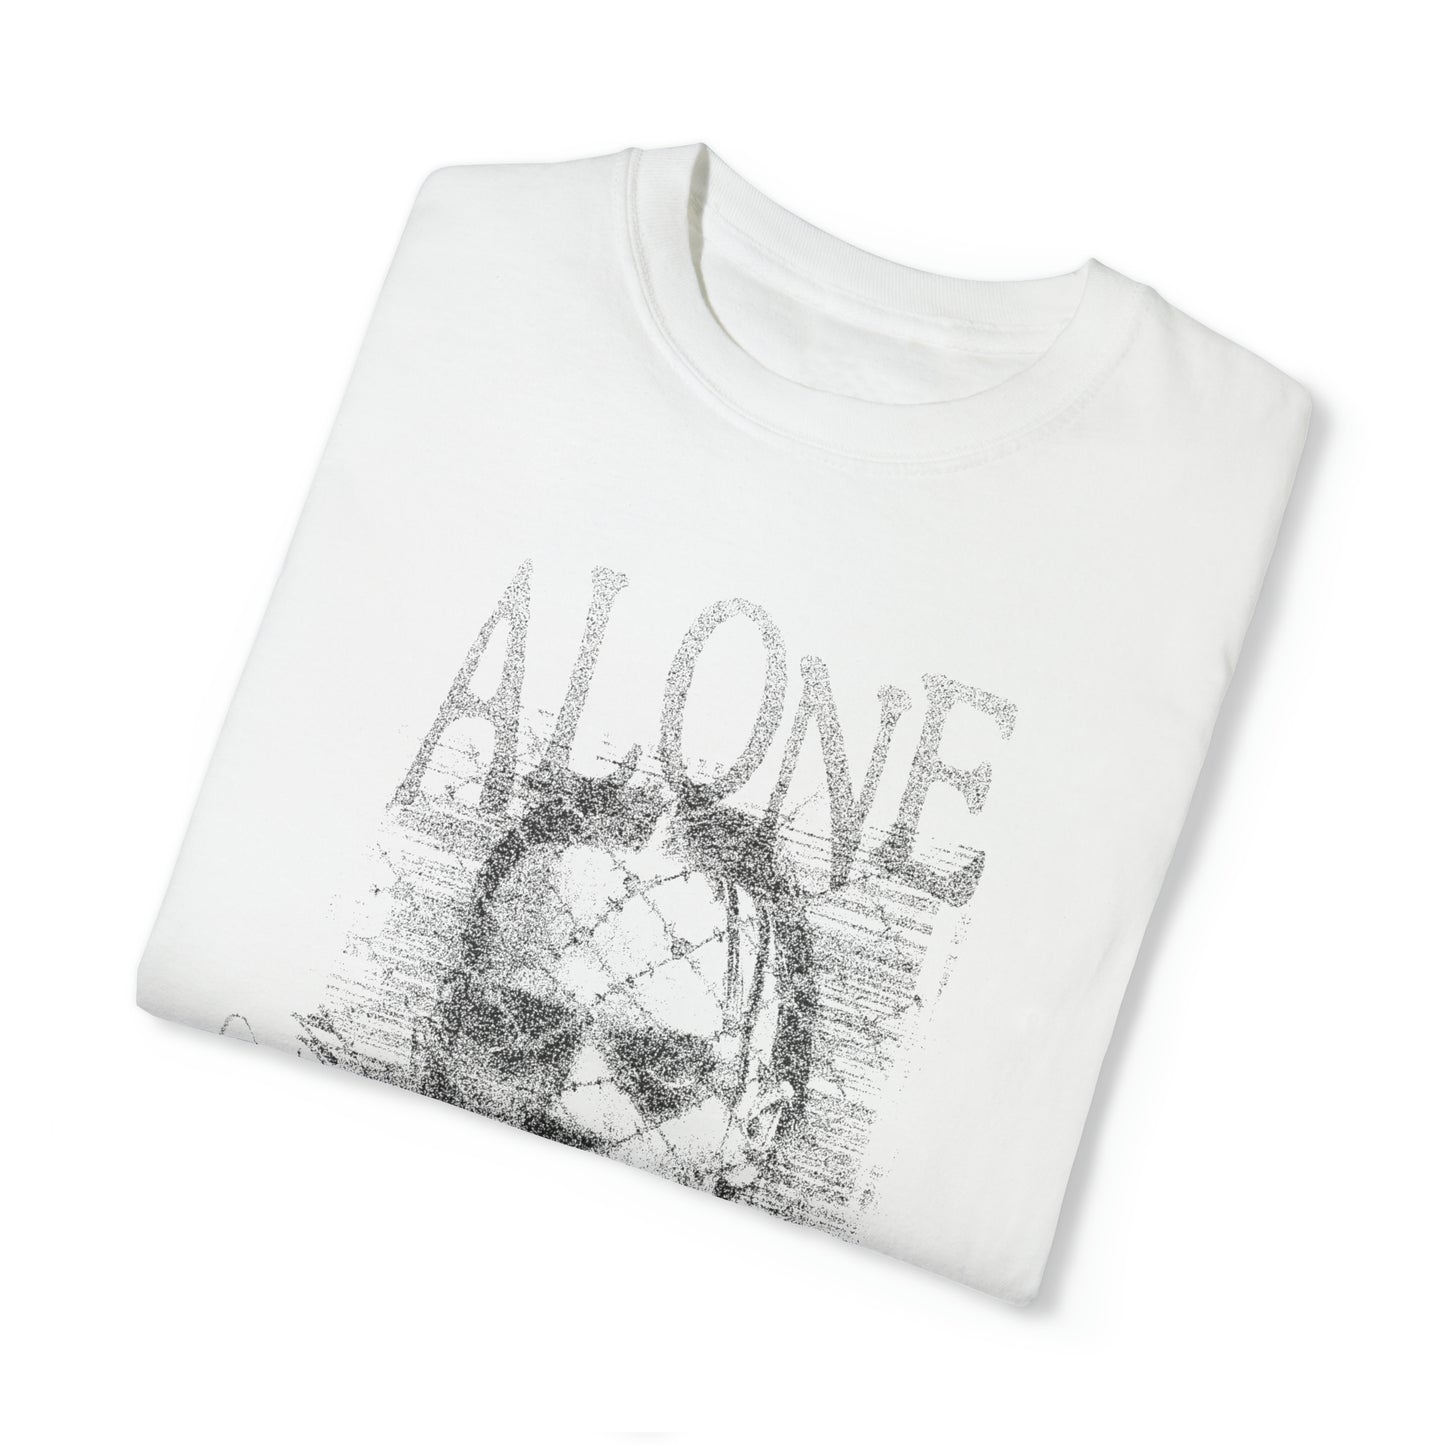 "Alone" s/s tee